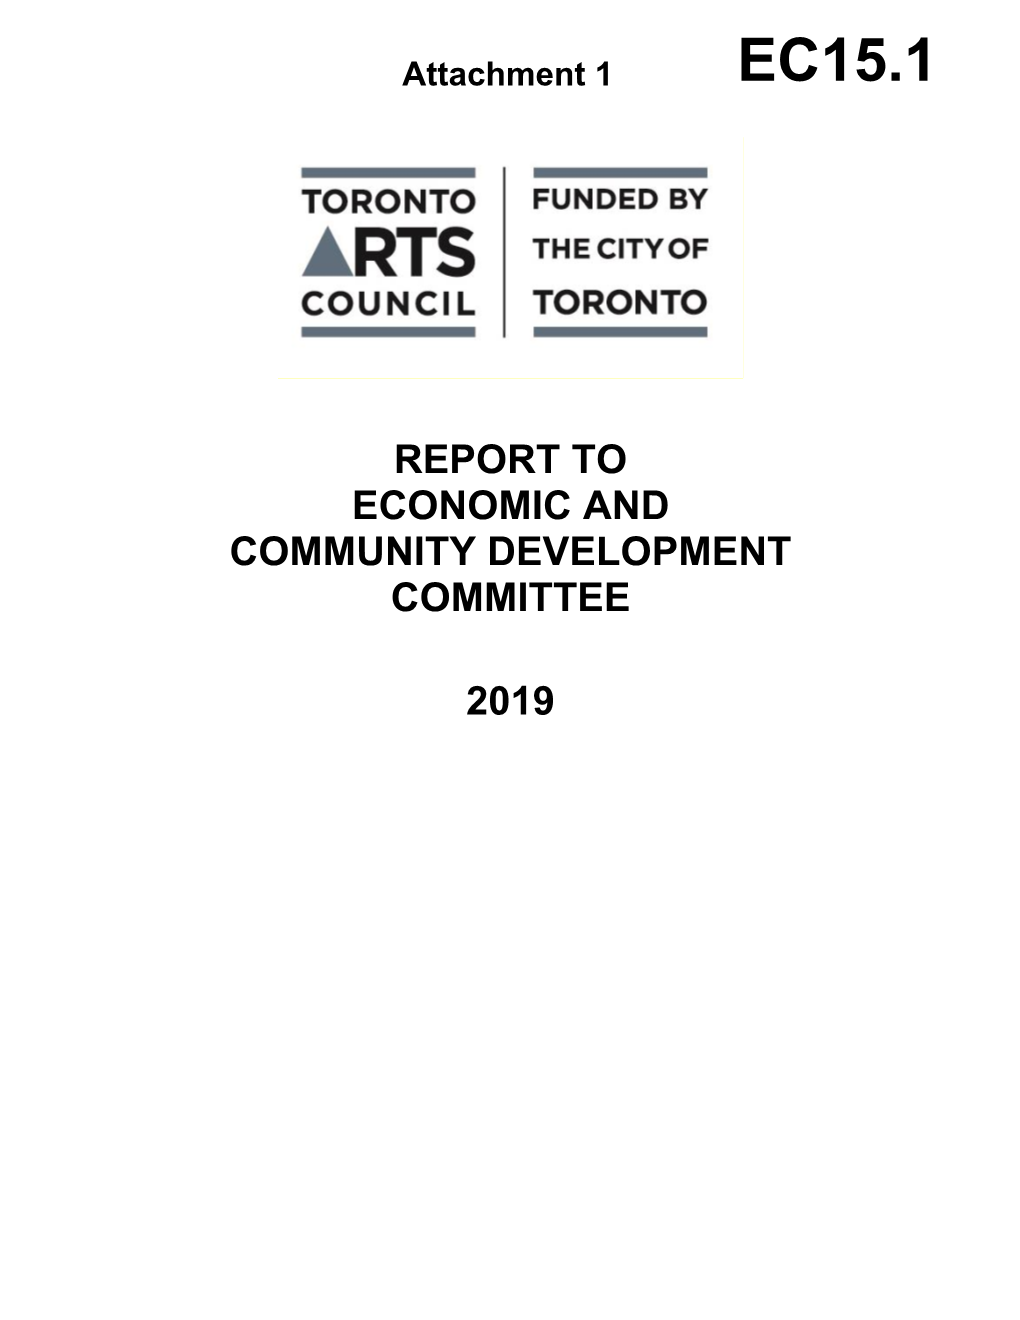 Toronto Arts Council Report 2019 Annual Allocations Report